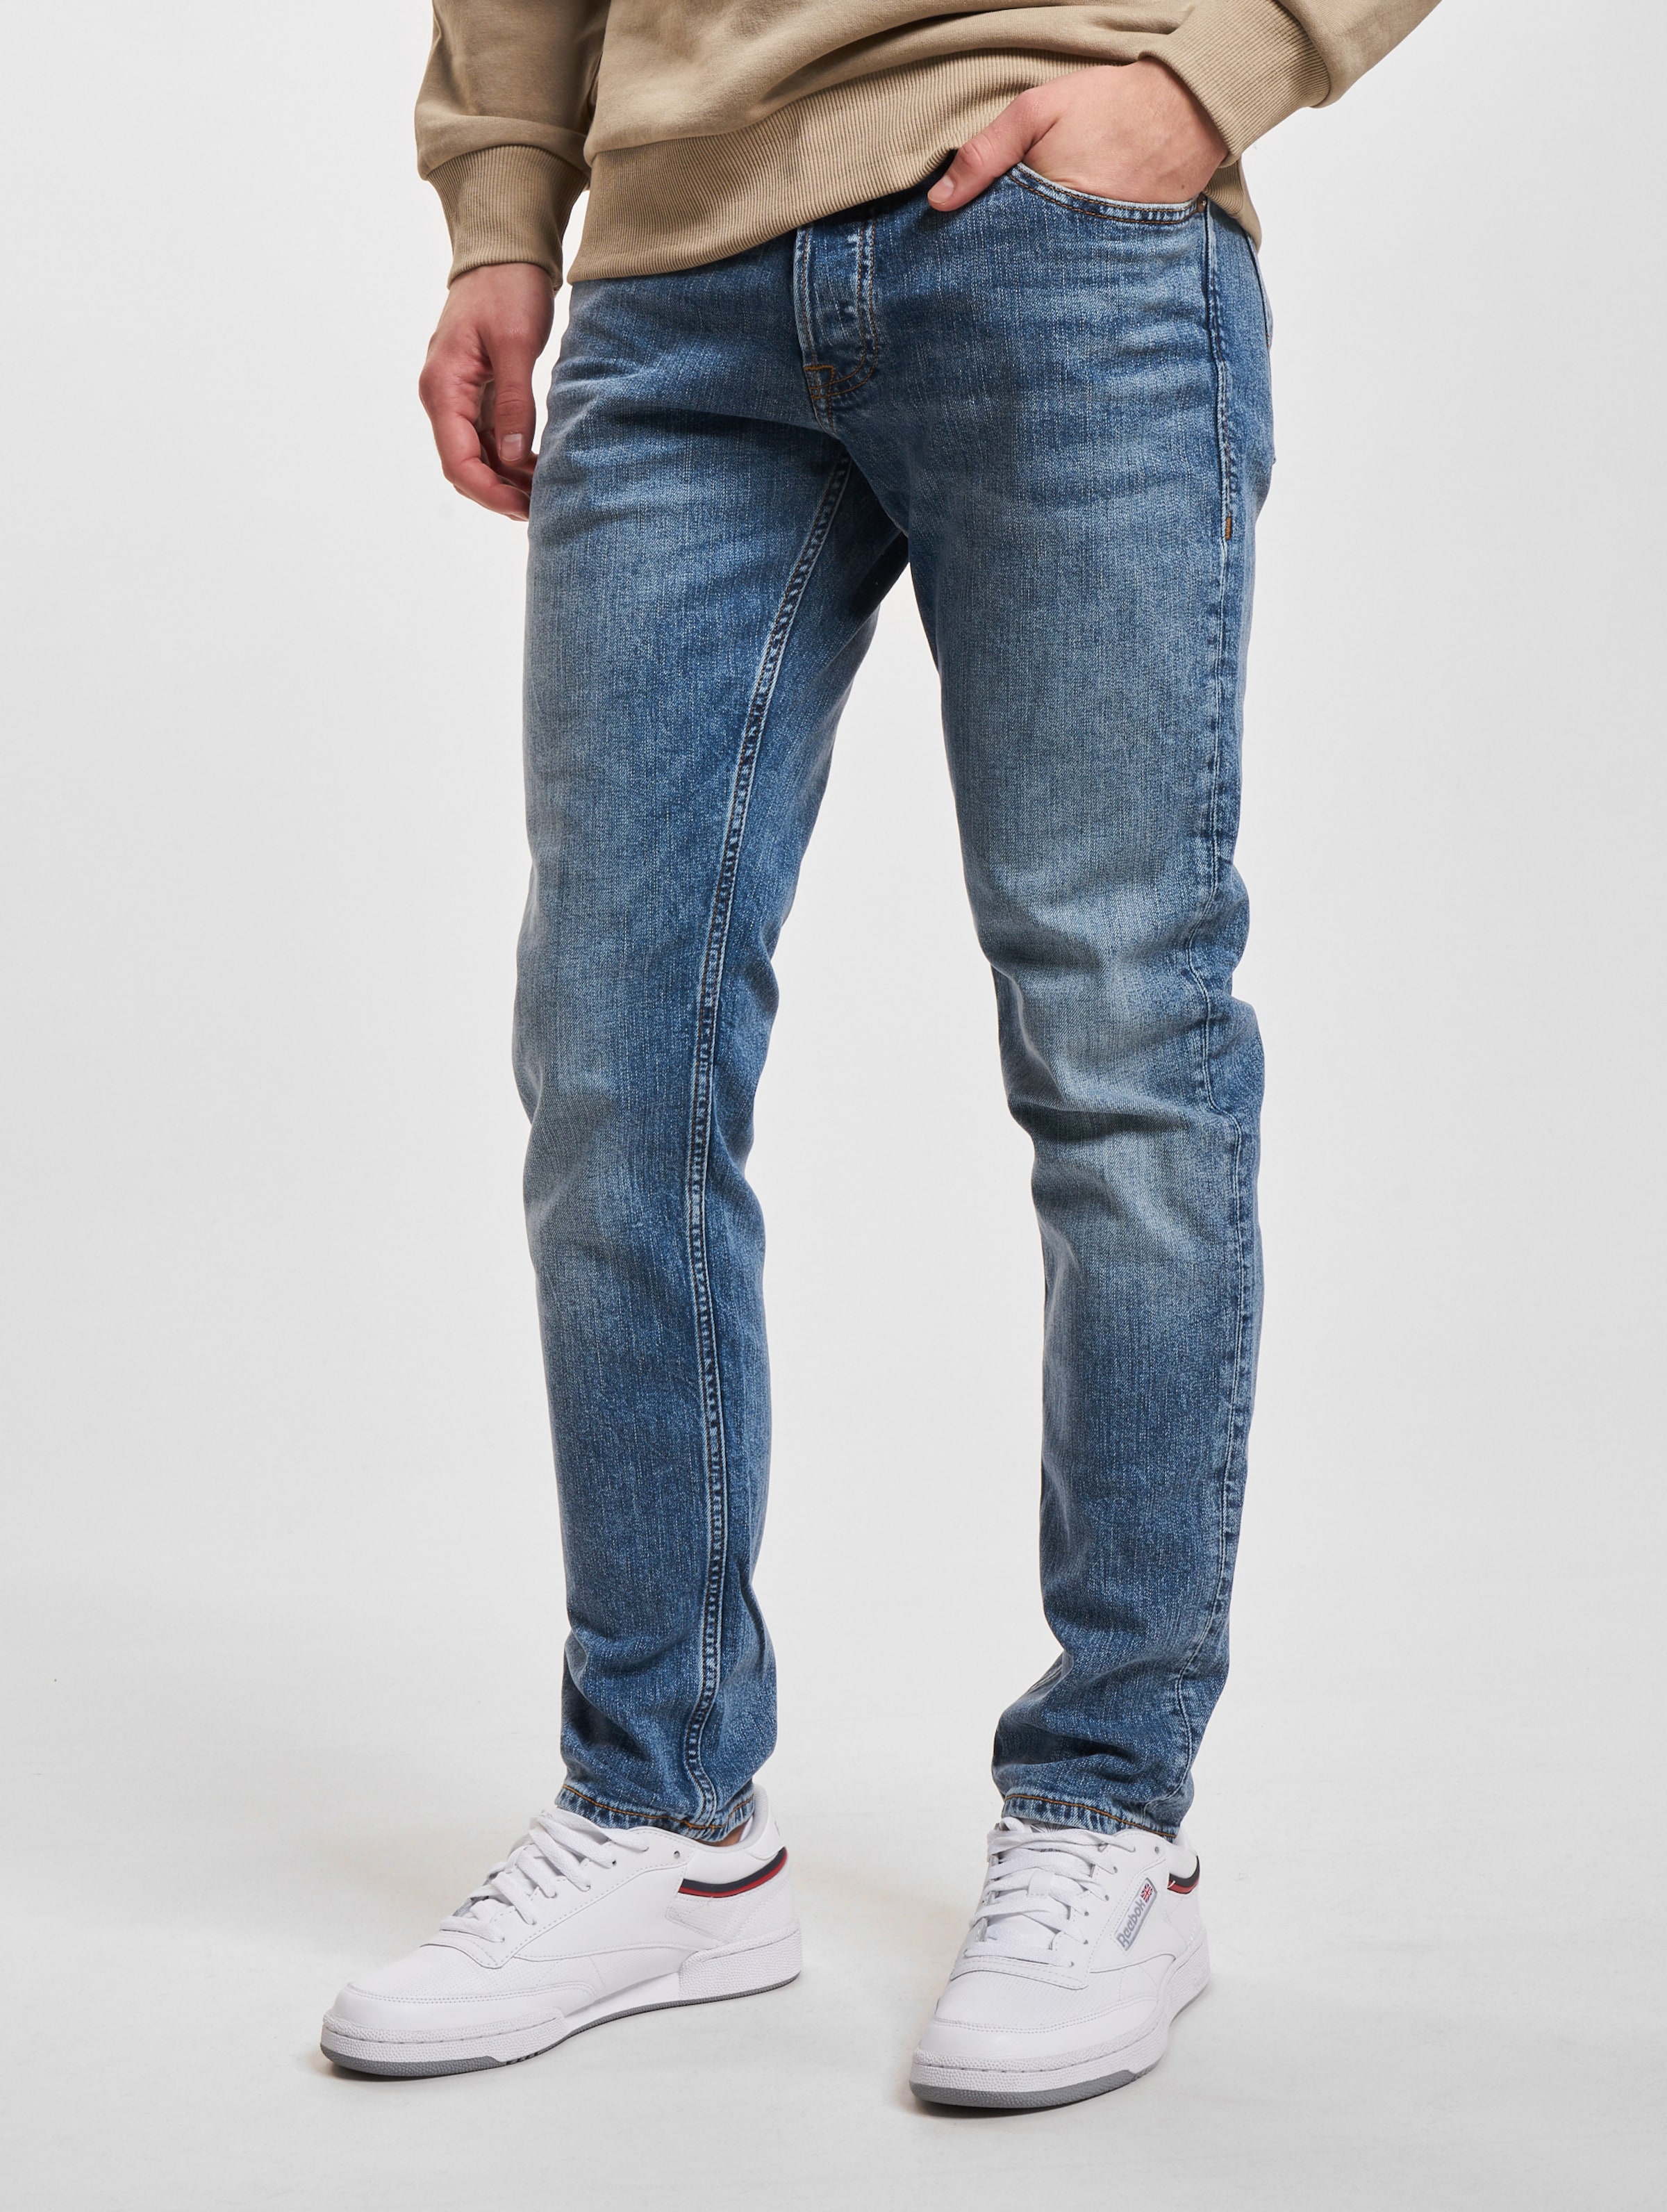 Jack & Jones Glenn Original Skinny Fit Jeans Mannen op kleur blauw, Maat 3434